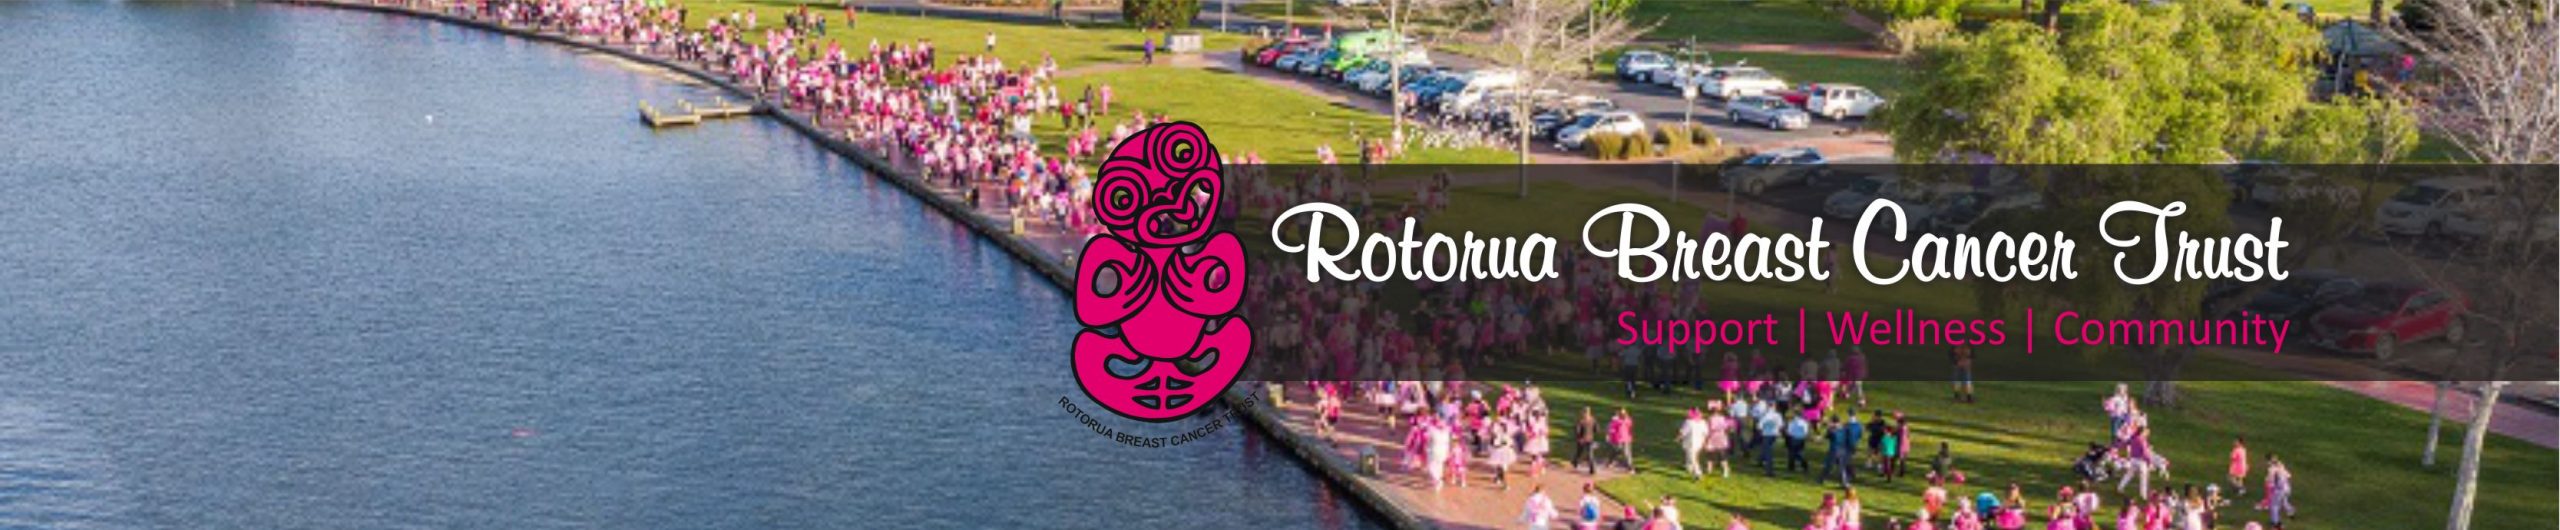 Rotorua Breast Cancer Trust